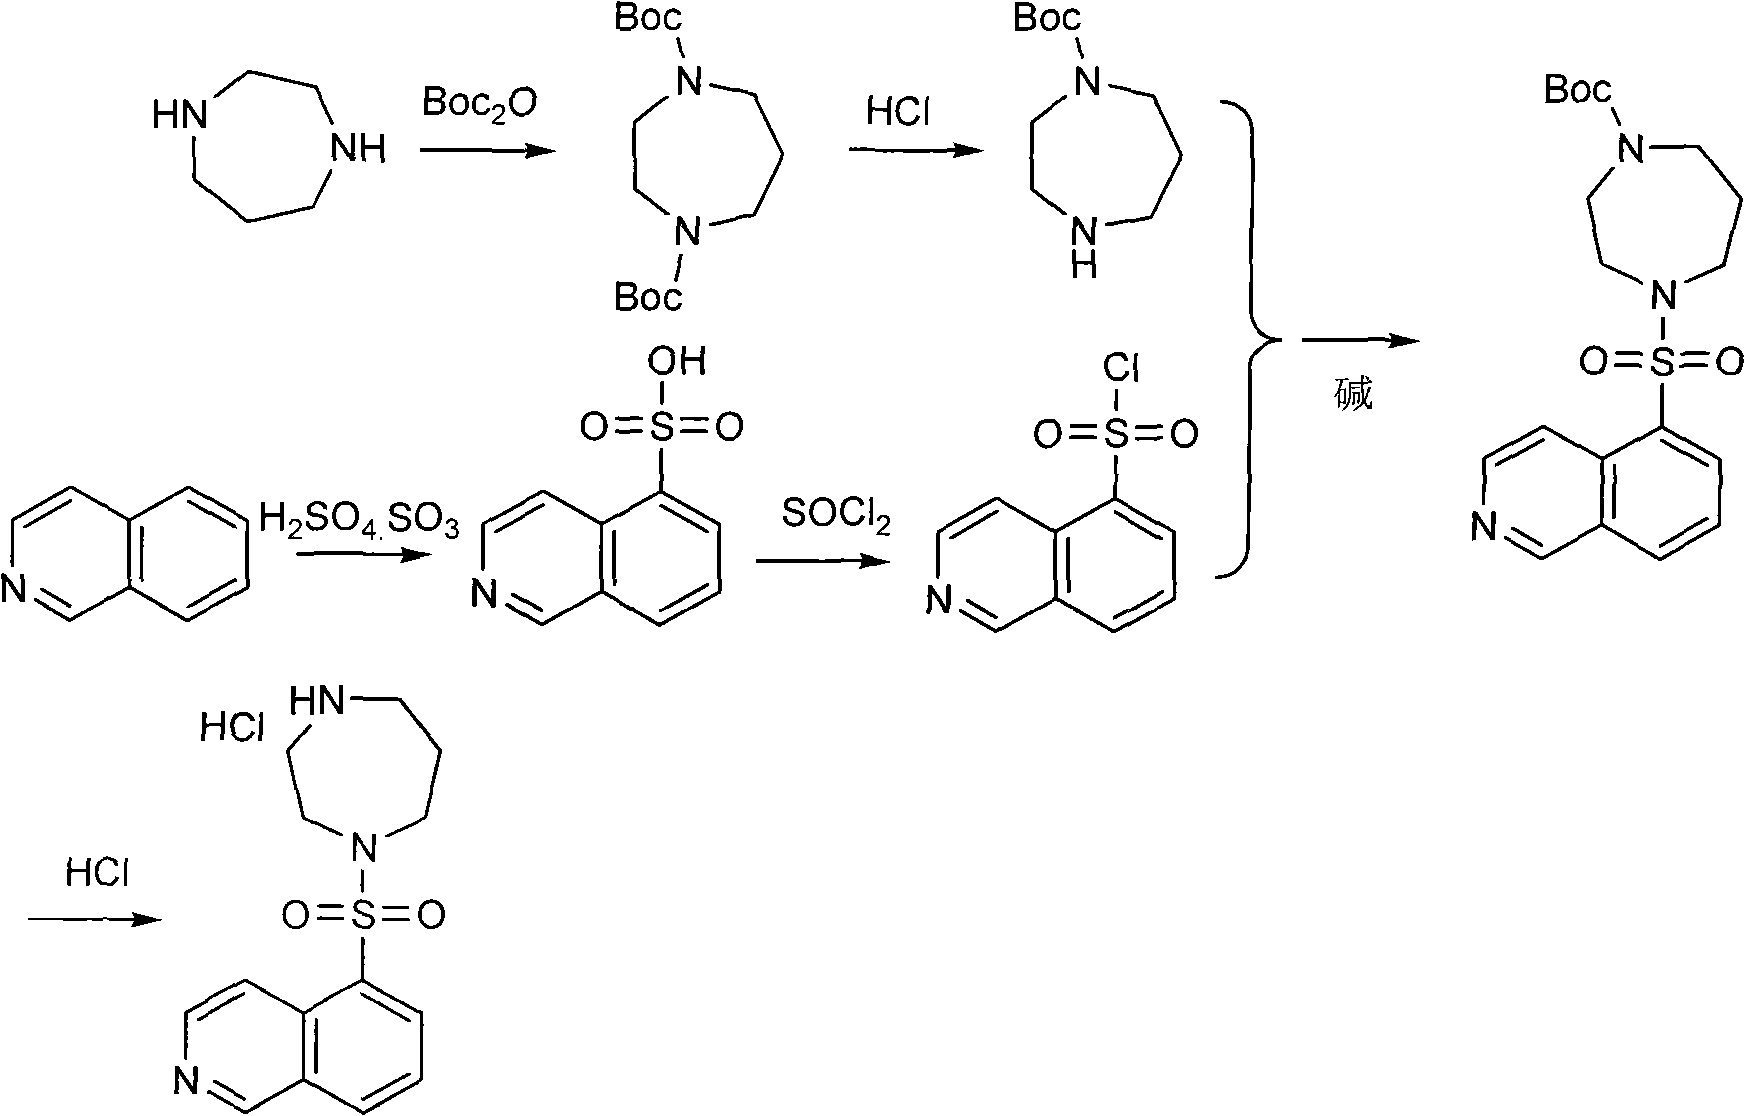 Production method of fasudil hydrochloride